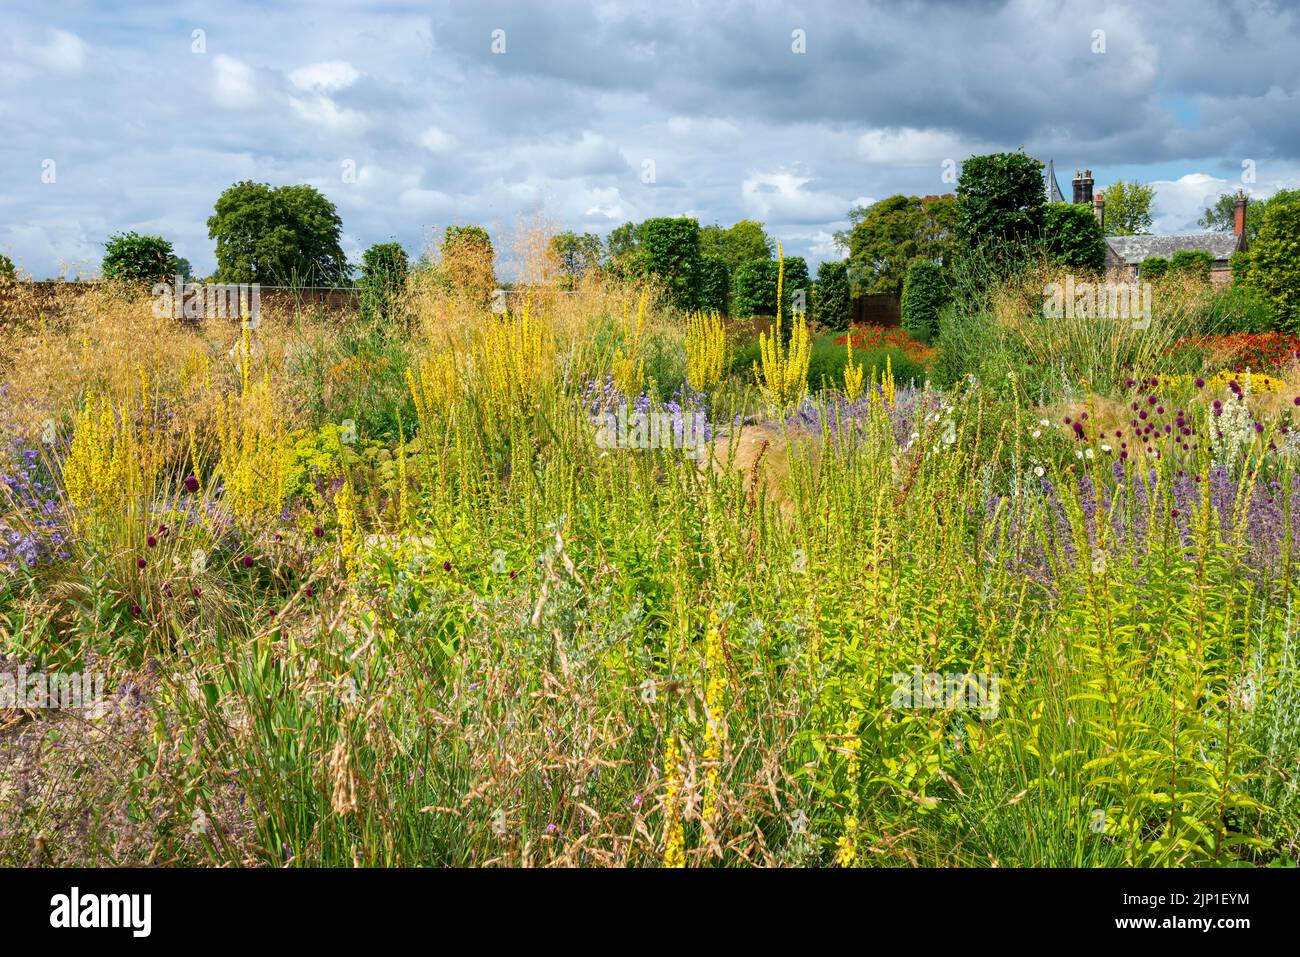 Le jardin du Paradis à RHS Bridgewater, Worsley, Greater Manchester, Angleterre. Banque D'Images